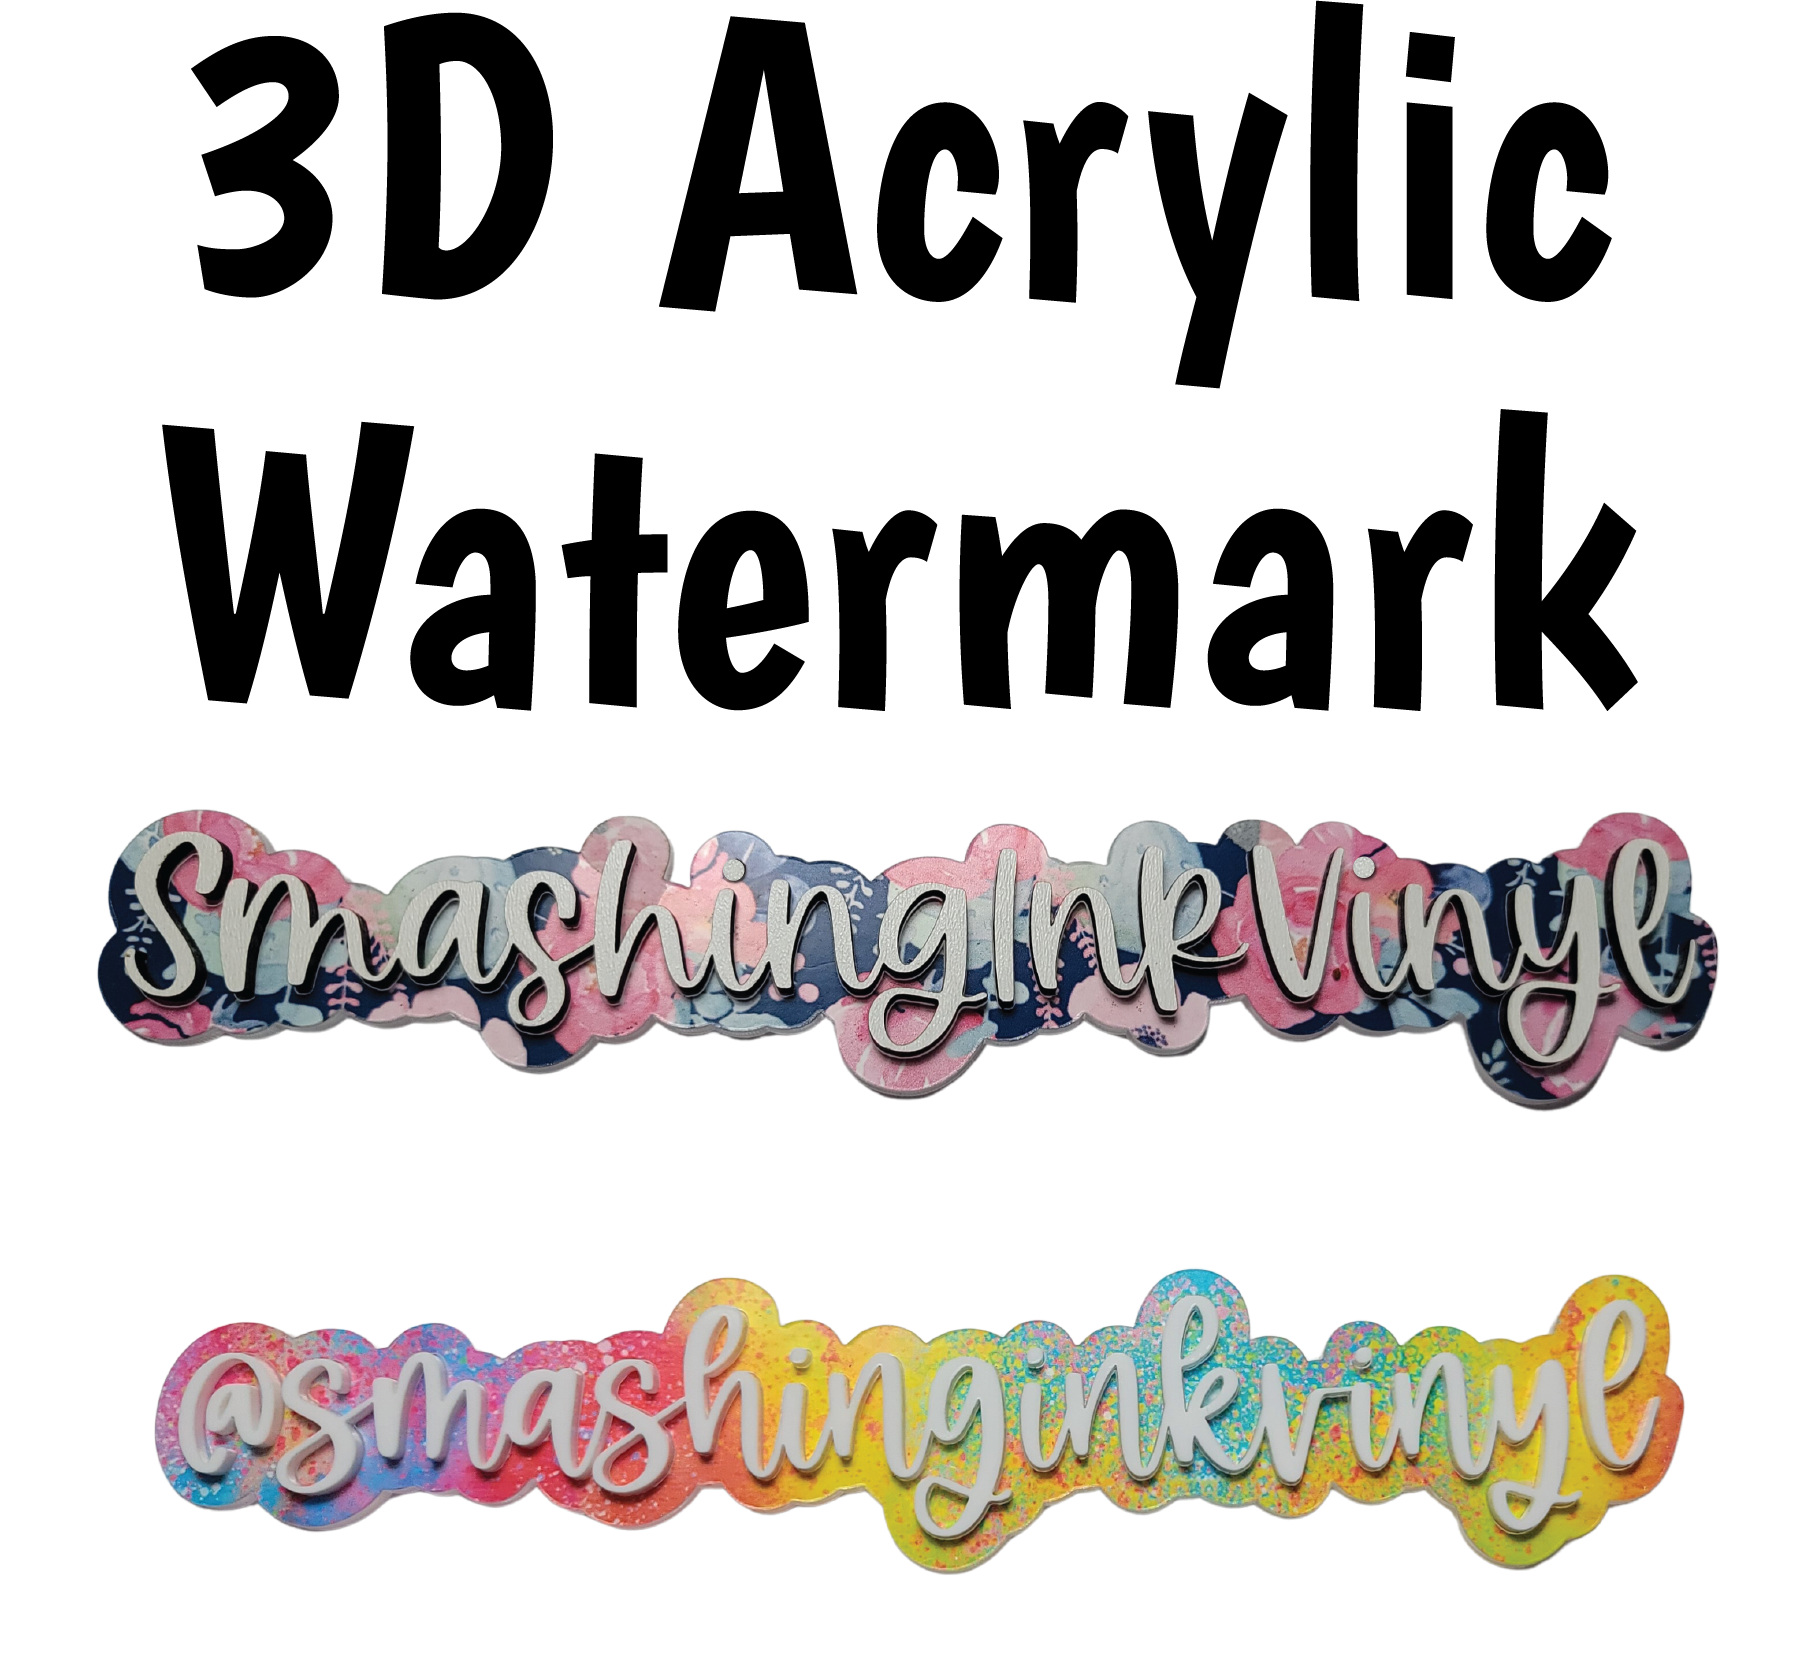 Acrylic Tags/Business Watermark